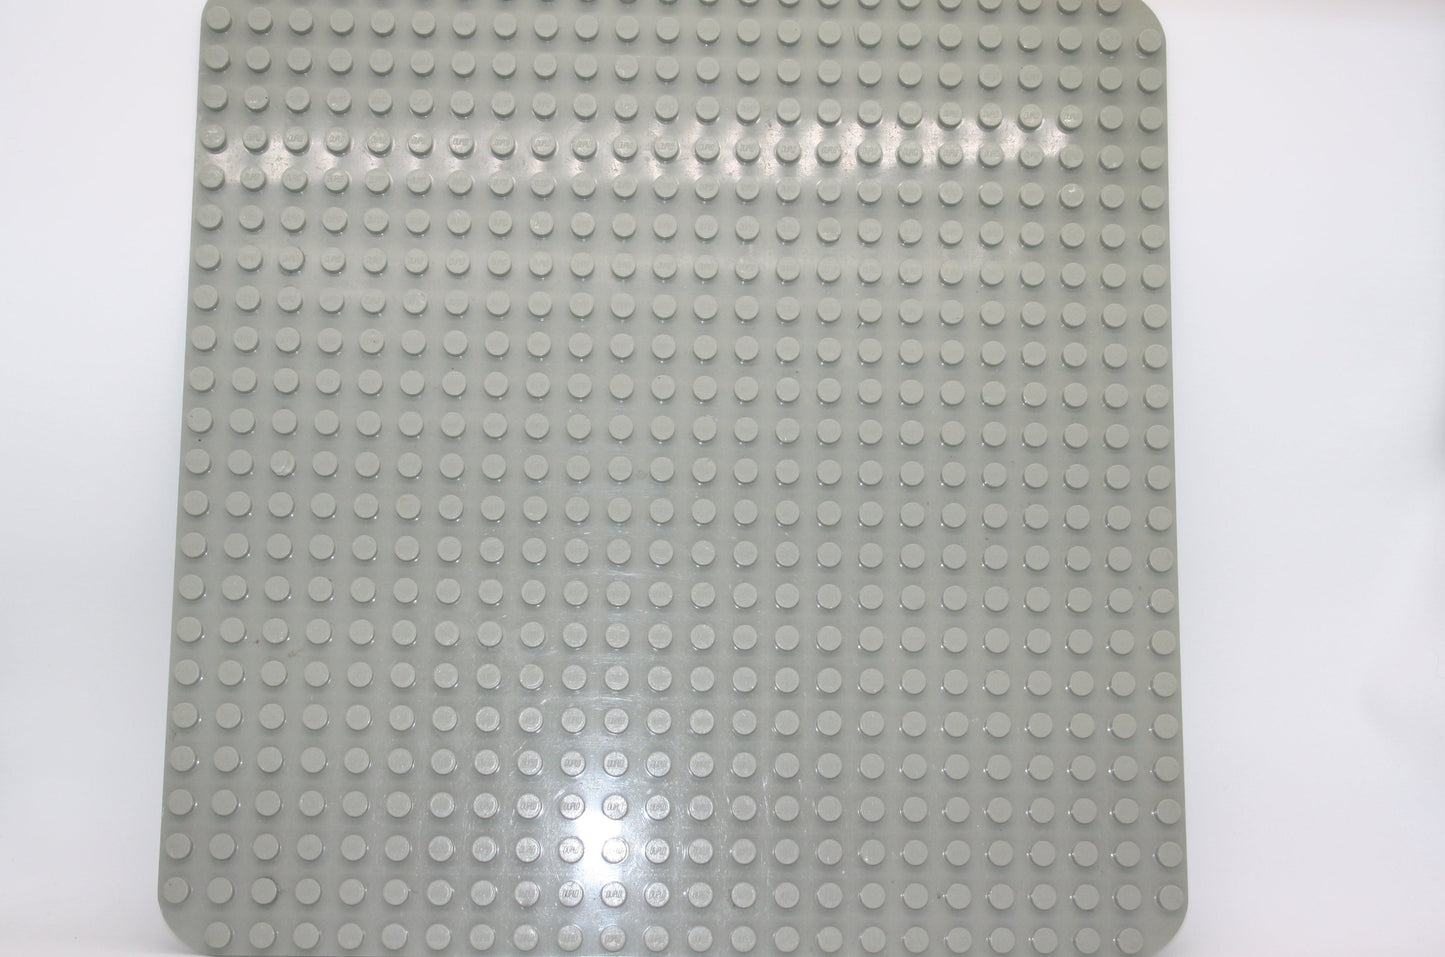 Duplo - 38x38 Platten  - grau - Bauplatten - Grundplatten